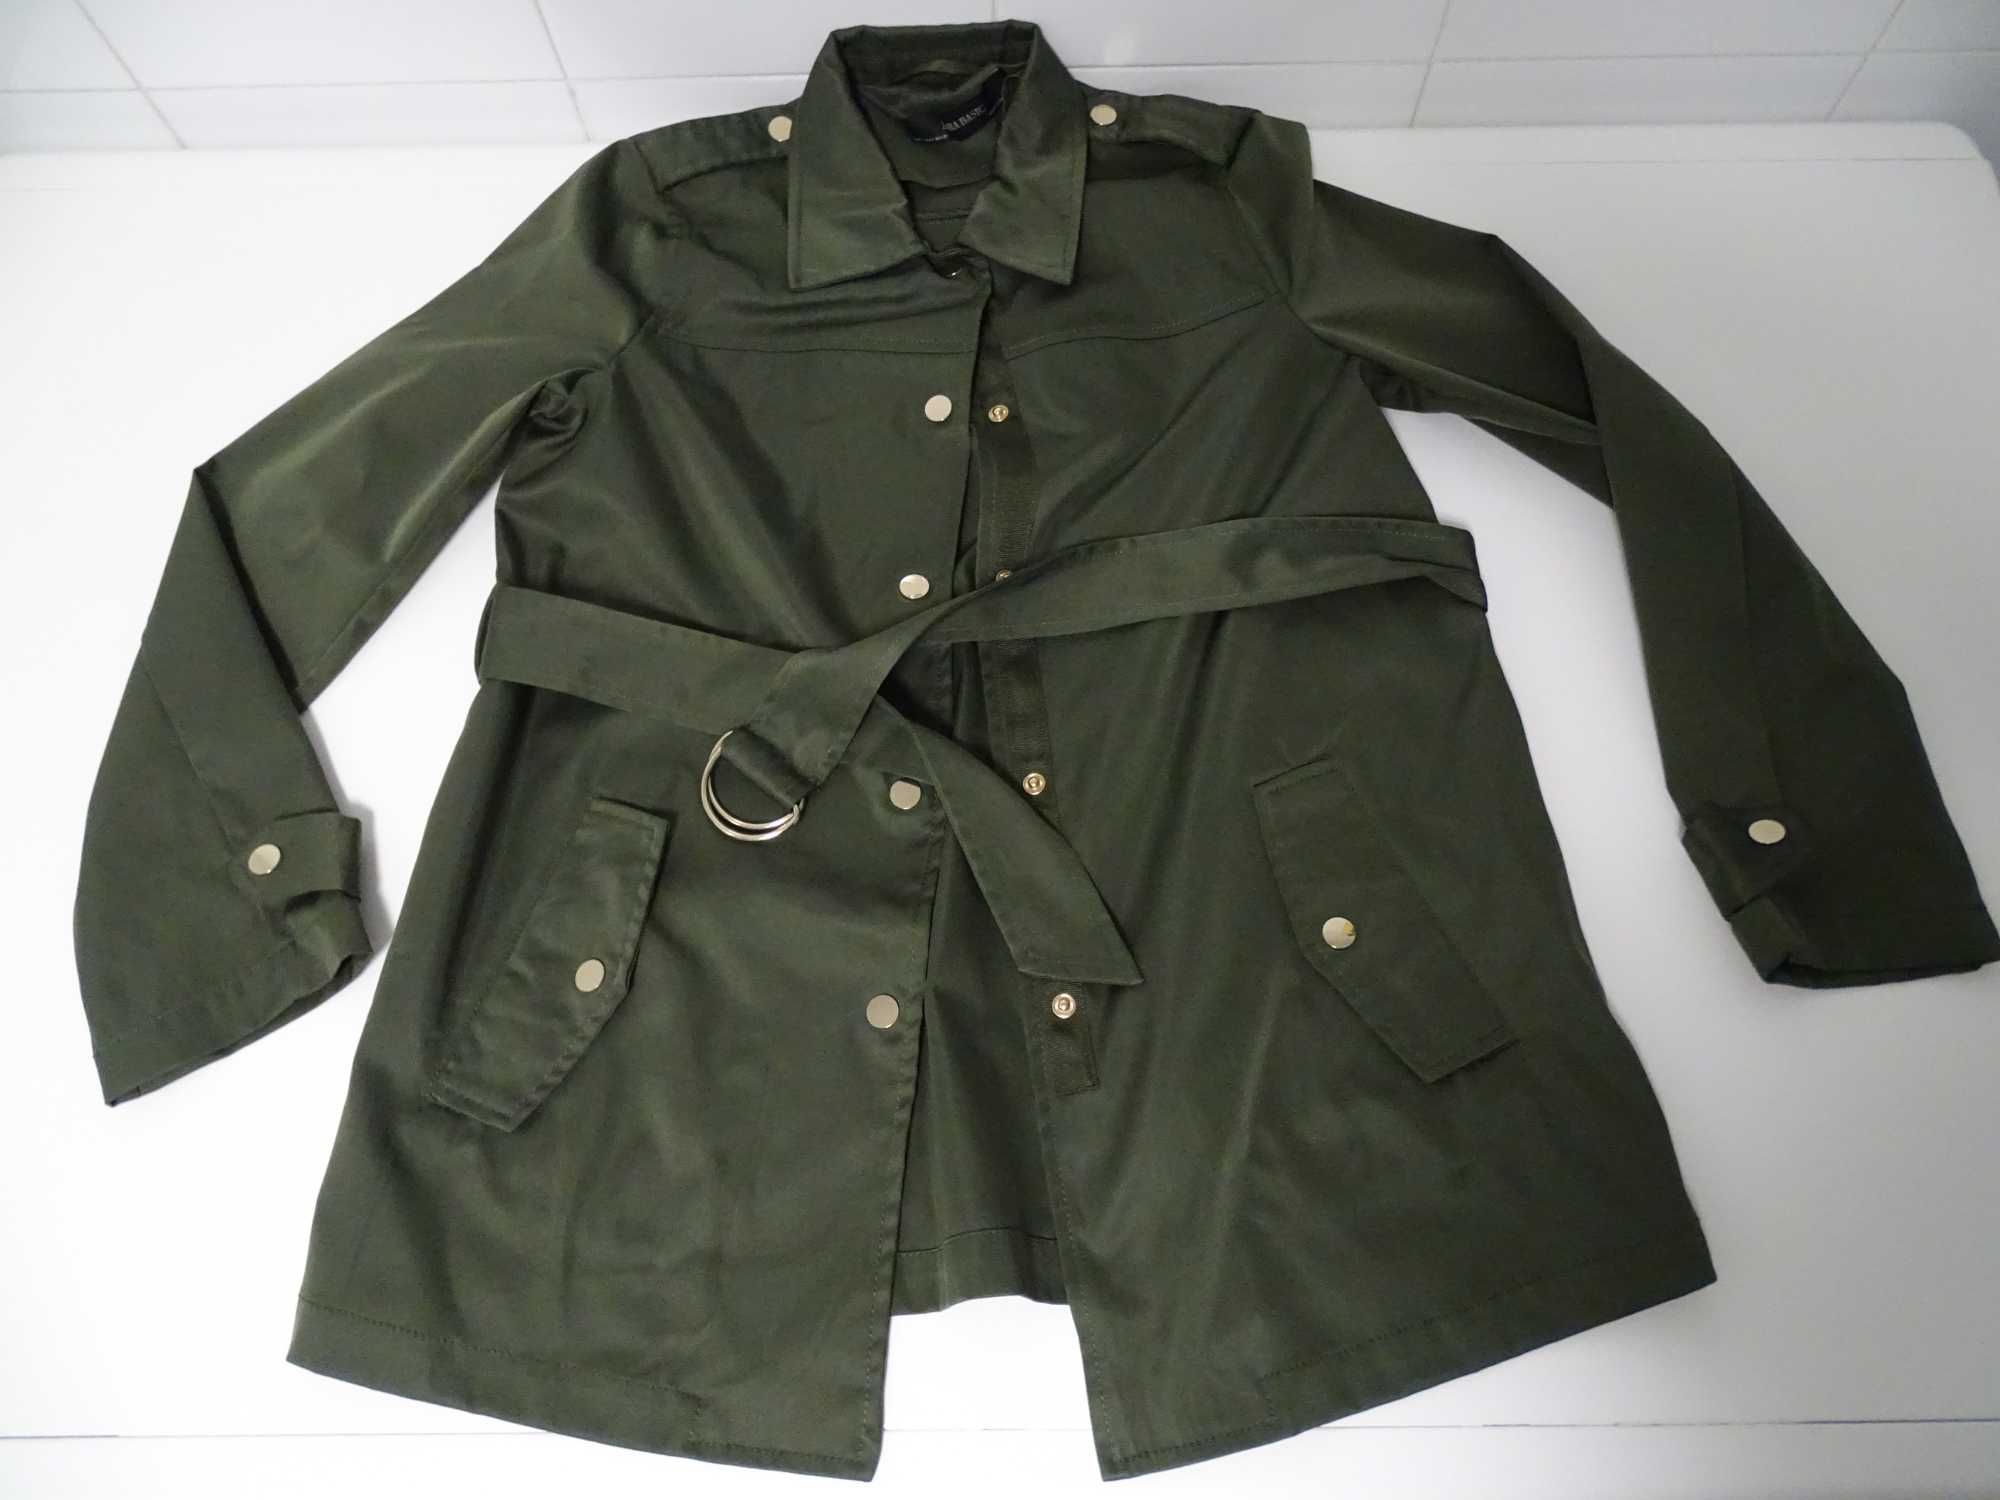 Gabardine/trench coat verde (NOVA POR ESTREAR)